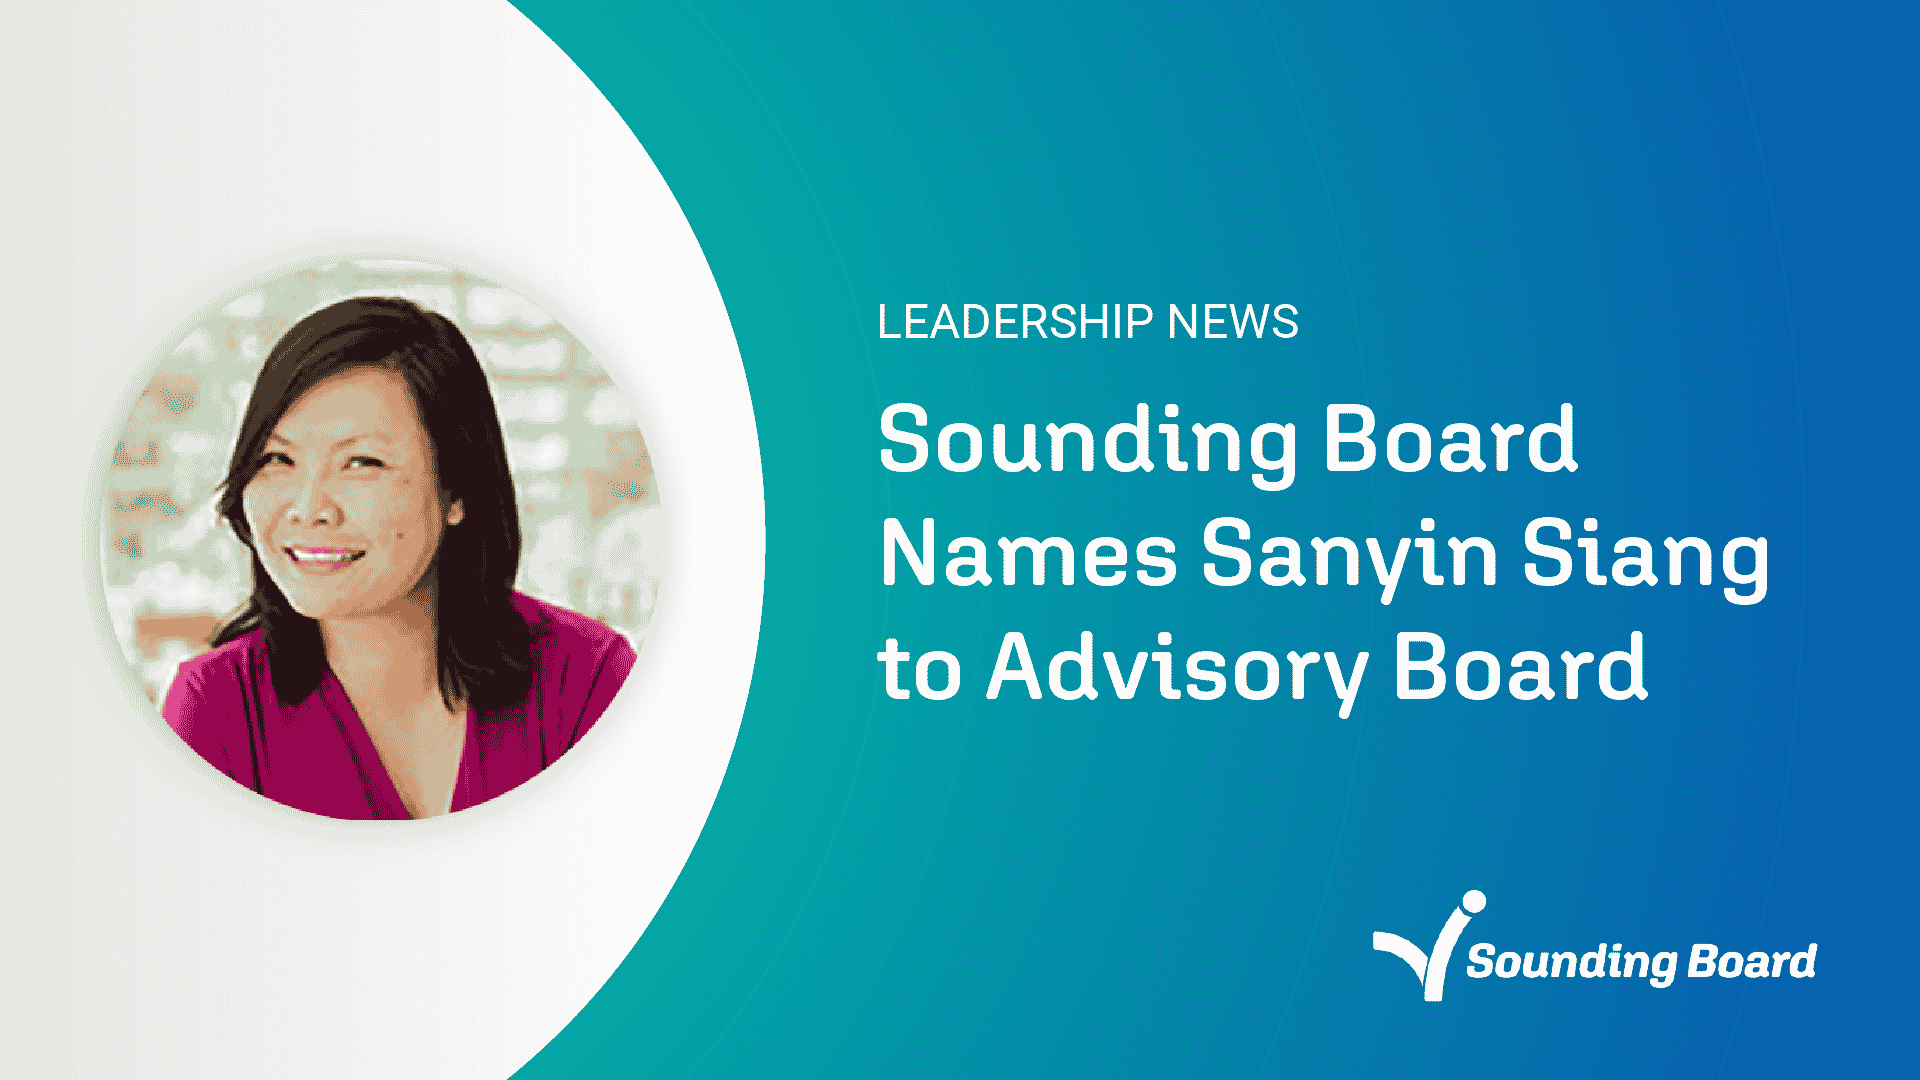 Sounding Board Names Sanyin Siang to Advisory Board